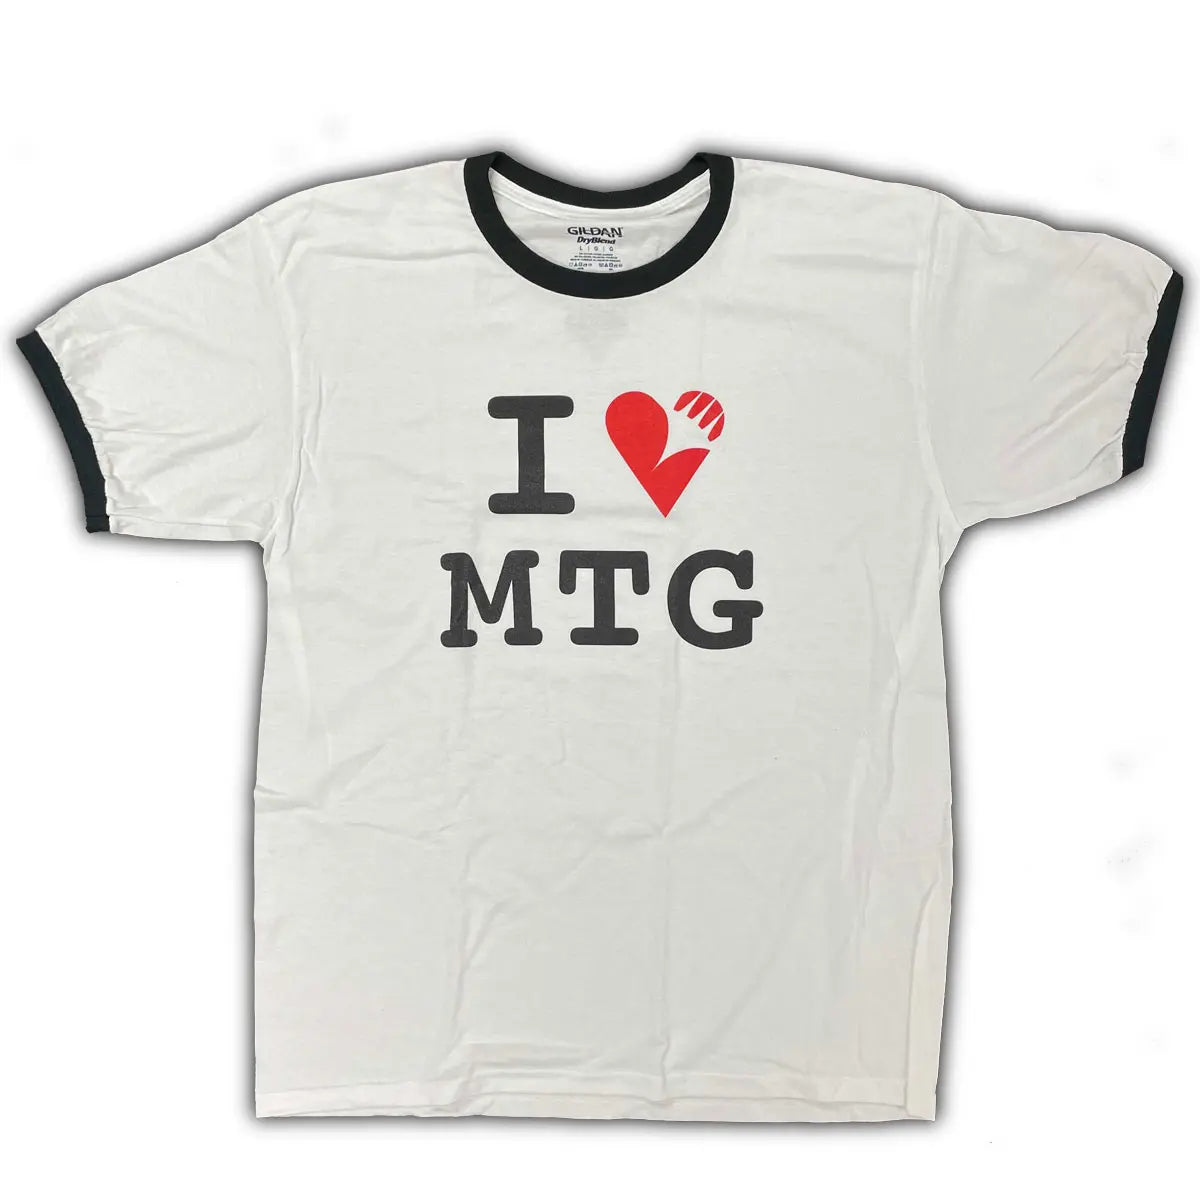 I Love MTG White T-Shirt for Magic: The Gathering